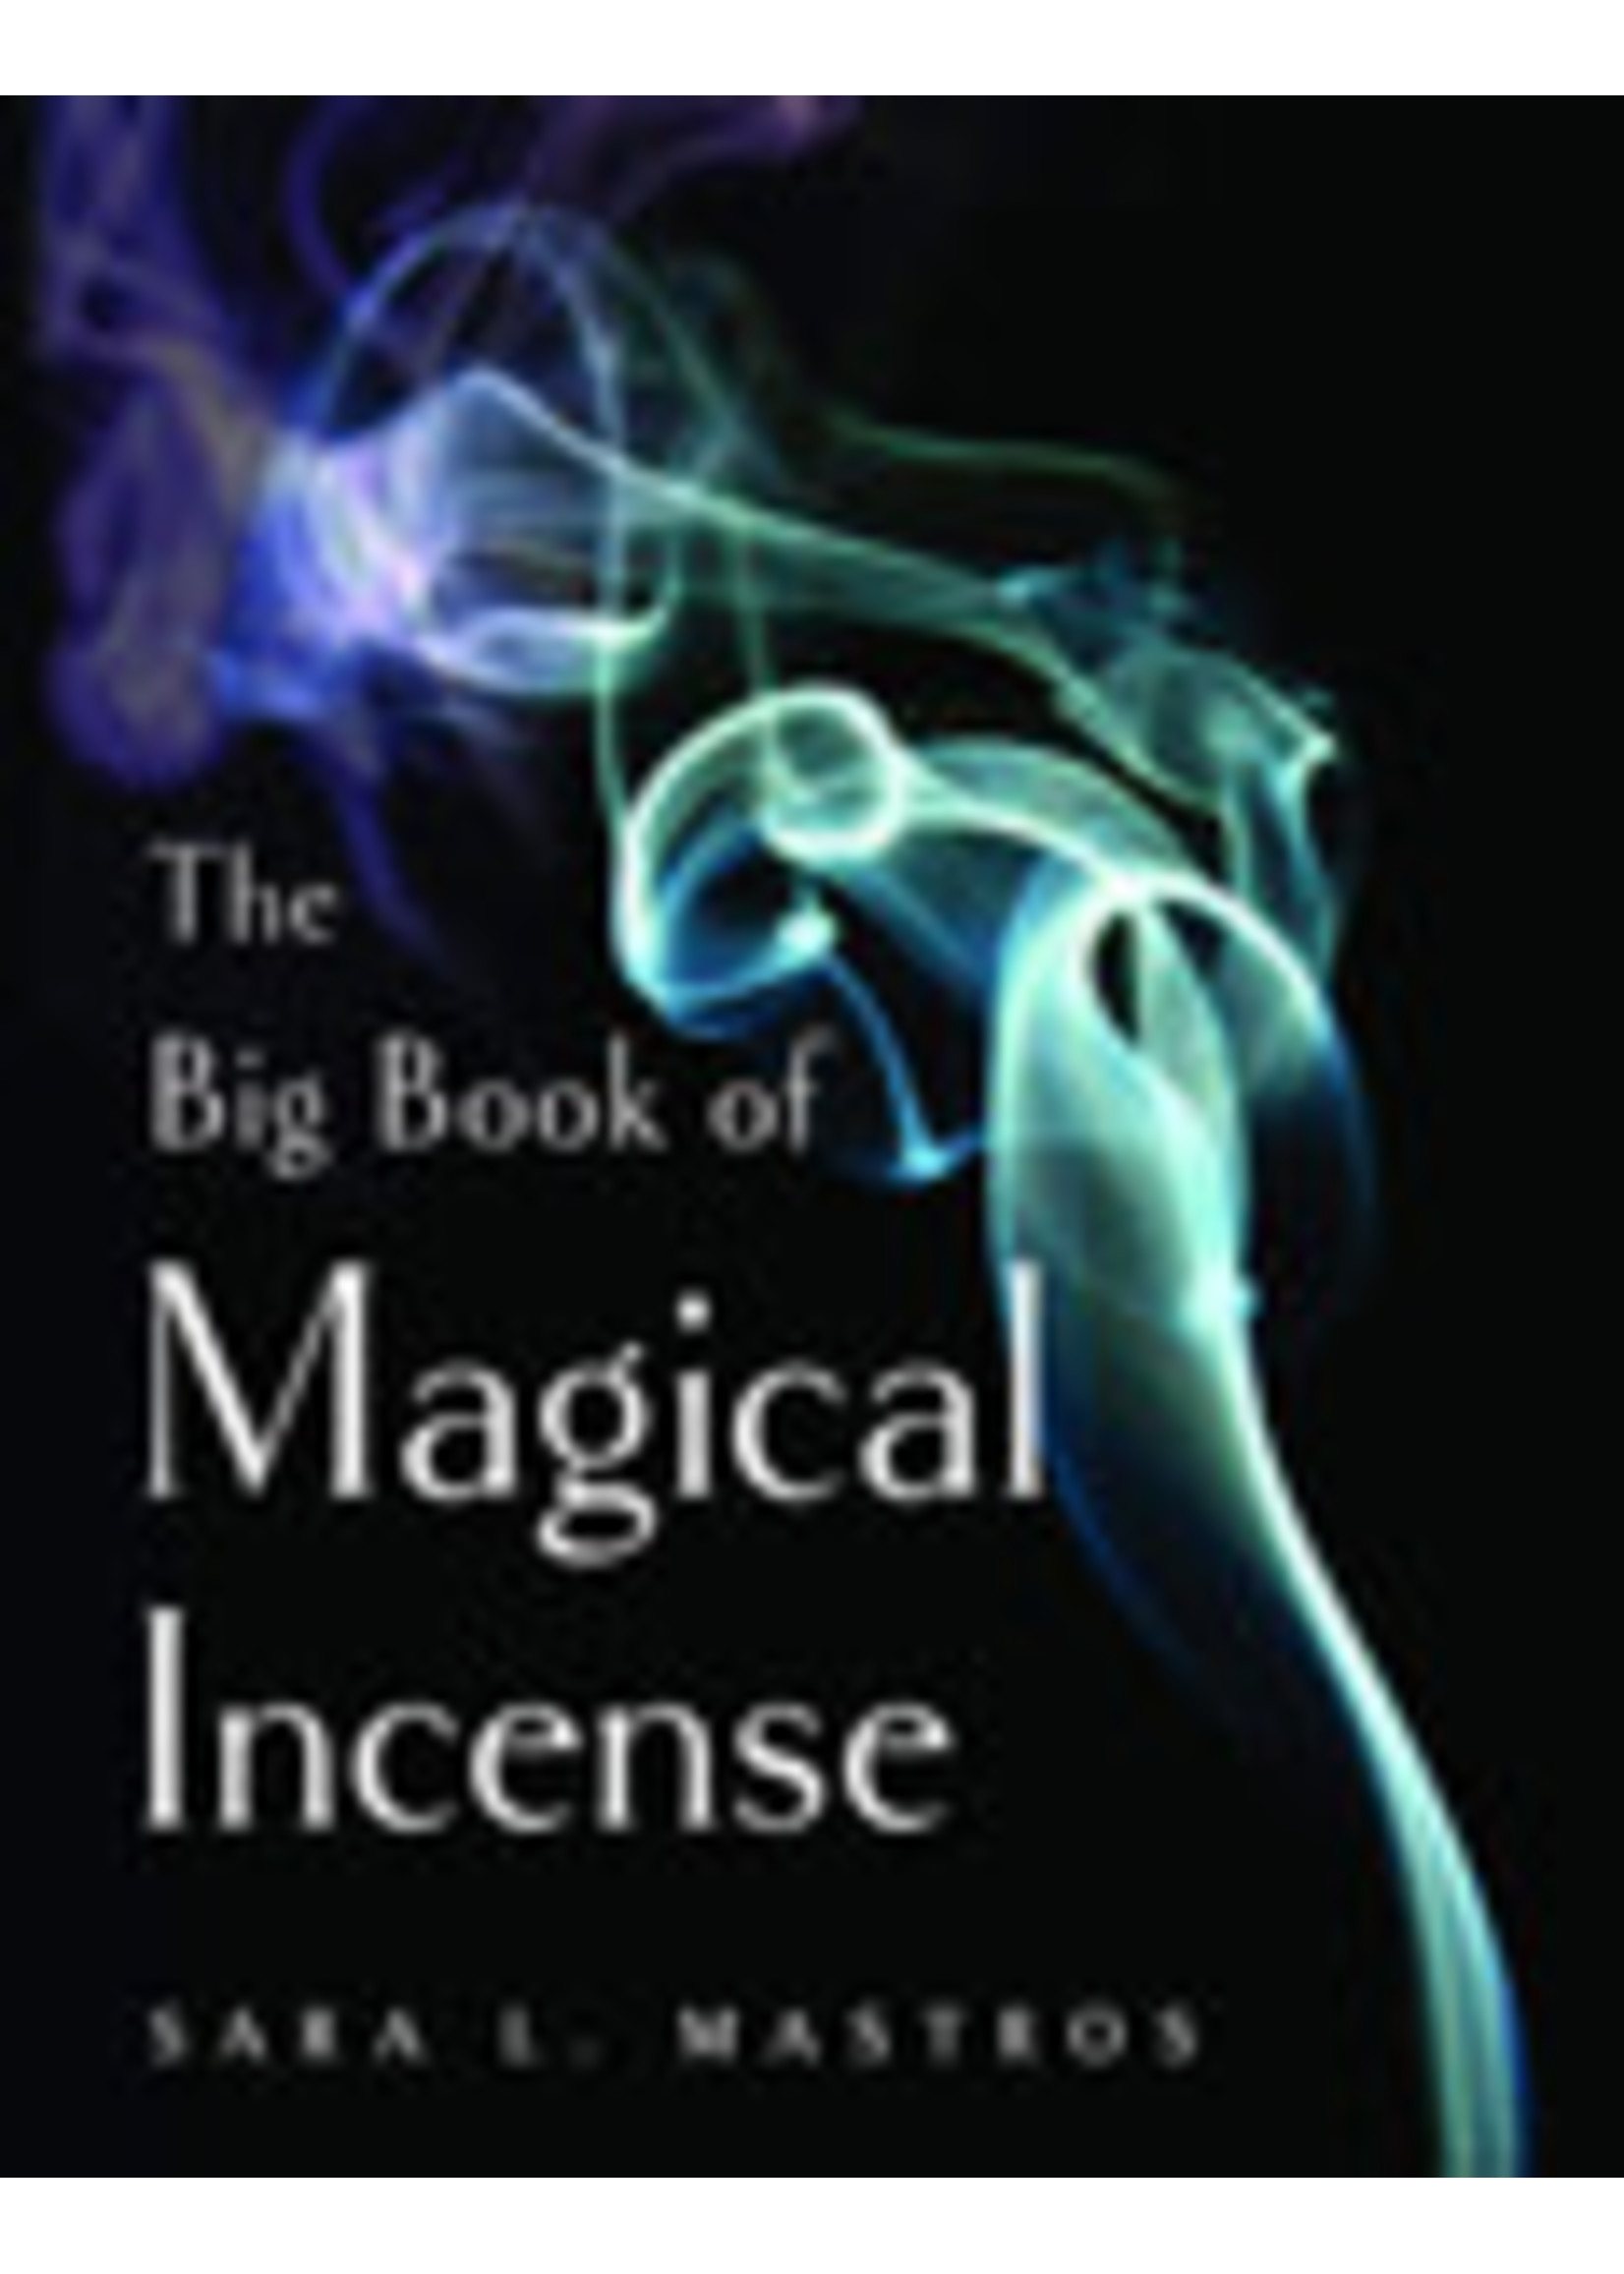 Big Book of Magical Incense